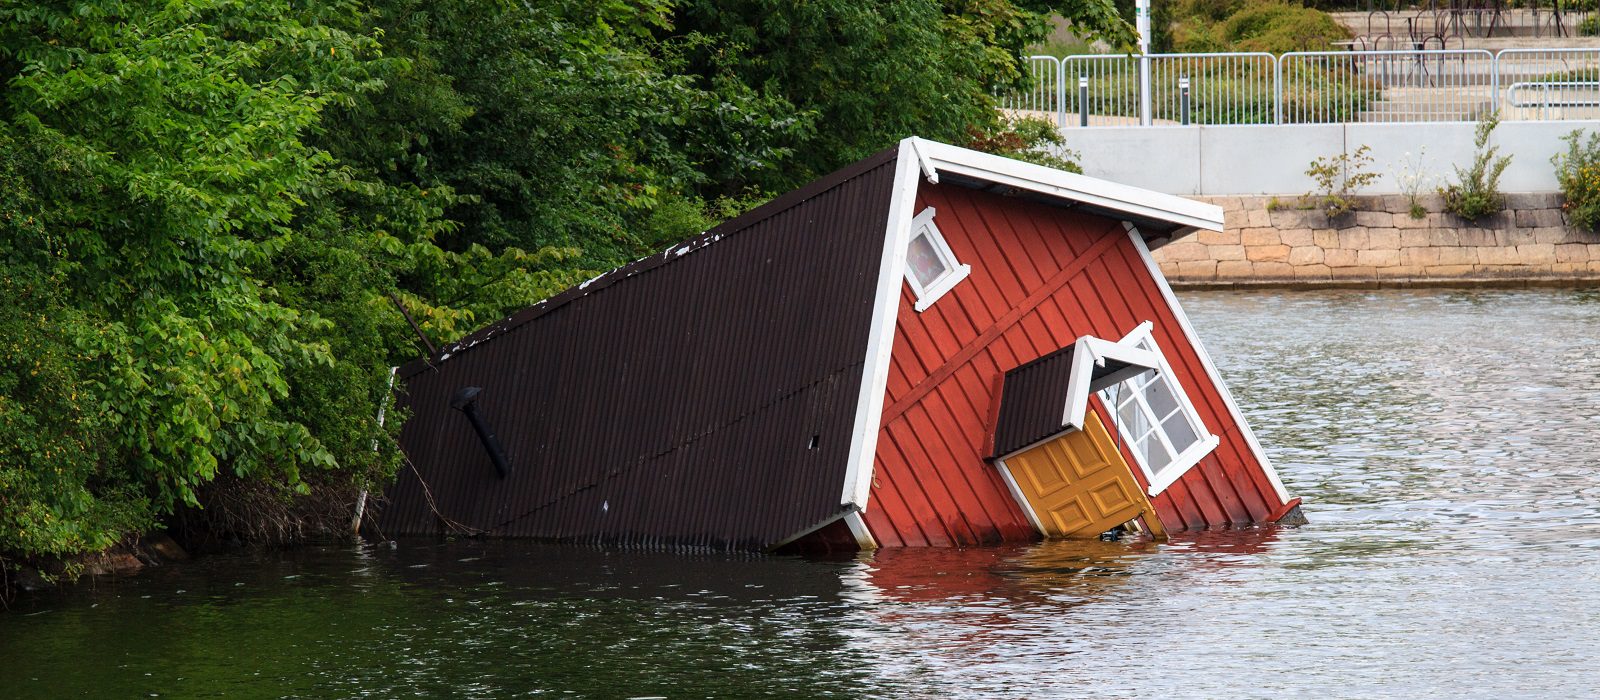 A sunken house in a river of Malmö, Sweden